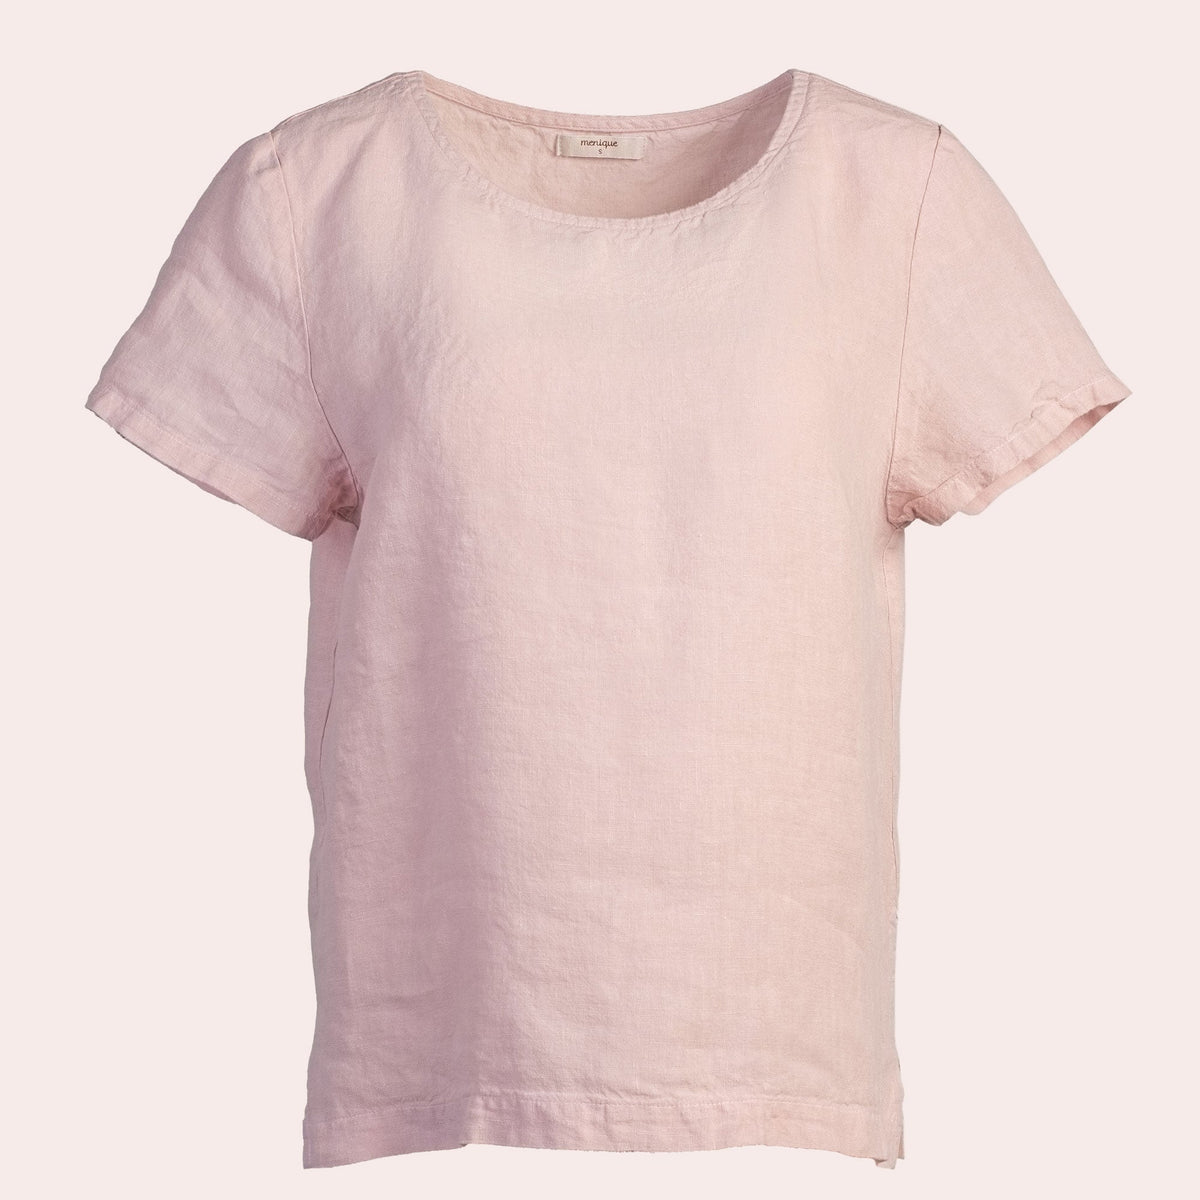 MENIQUE 100% Linen T-Shirt Top Emma Dusty Pink